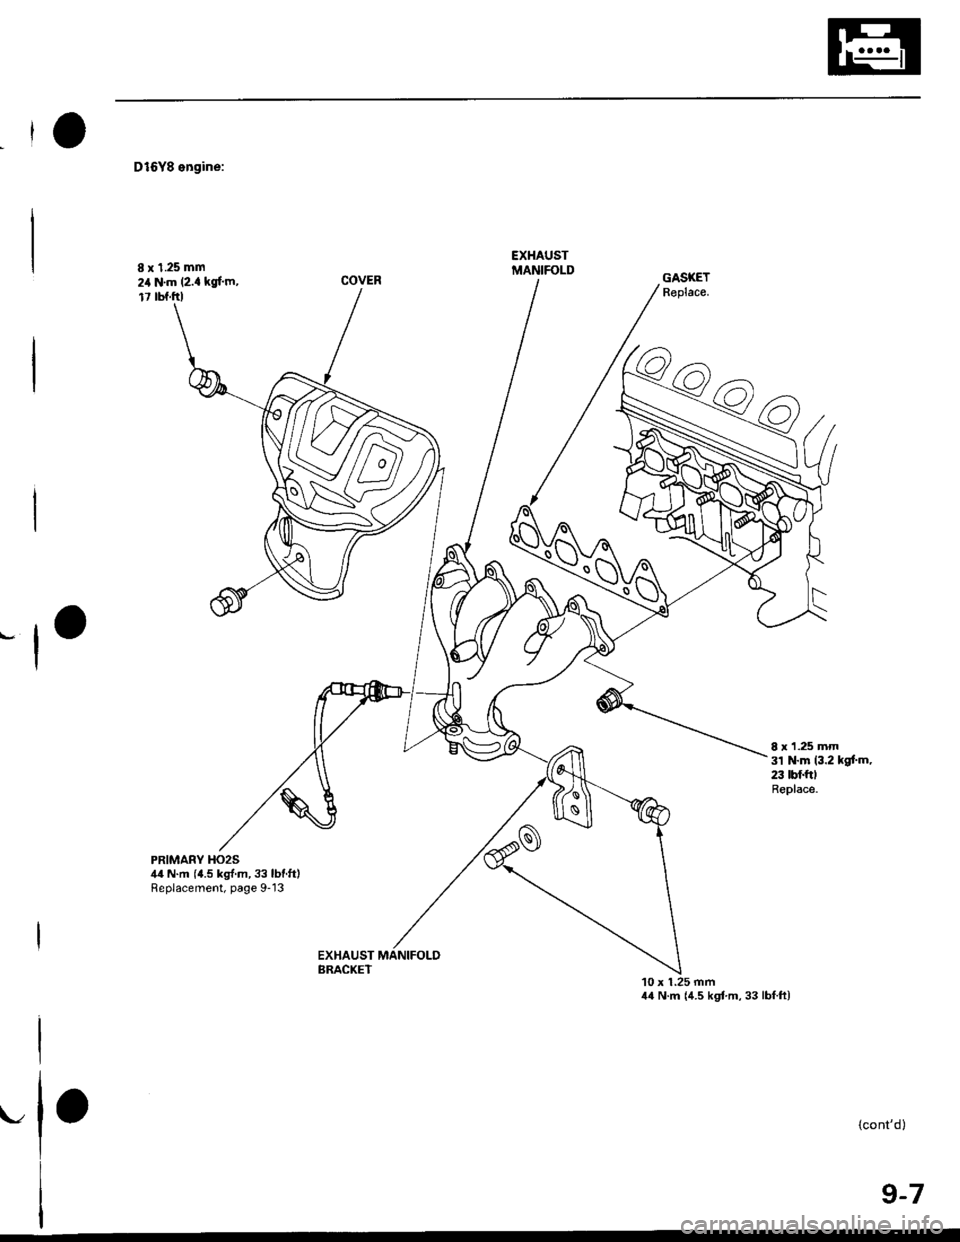 HONDA CIVIC 2000 6.G Workshop Manual D15Y8 engine:
8 x 1.25 mm2,1 N.m (2.a kgfm,
17 tbf.ftl
GASKETReplace.
8 x 1.25 mm31 N.m 13.2 kgfm,23 lbf.ftlReplace.
PRIMARY HO2S44 N.m (4.5 kgf.m, 33 lbtft)Replacement, page 9-13
EXHAUST MANIFOLDBR